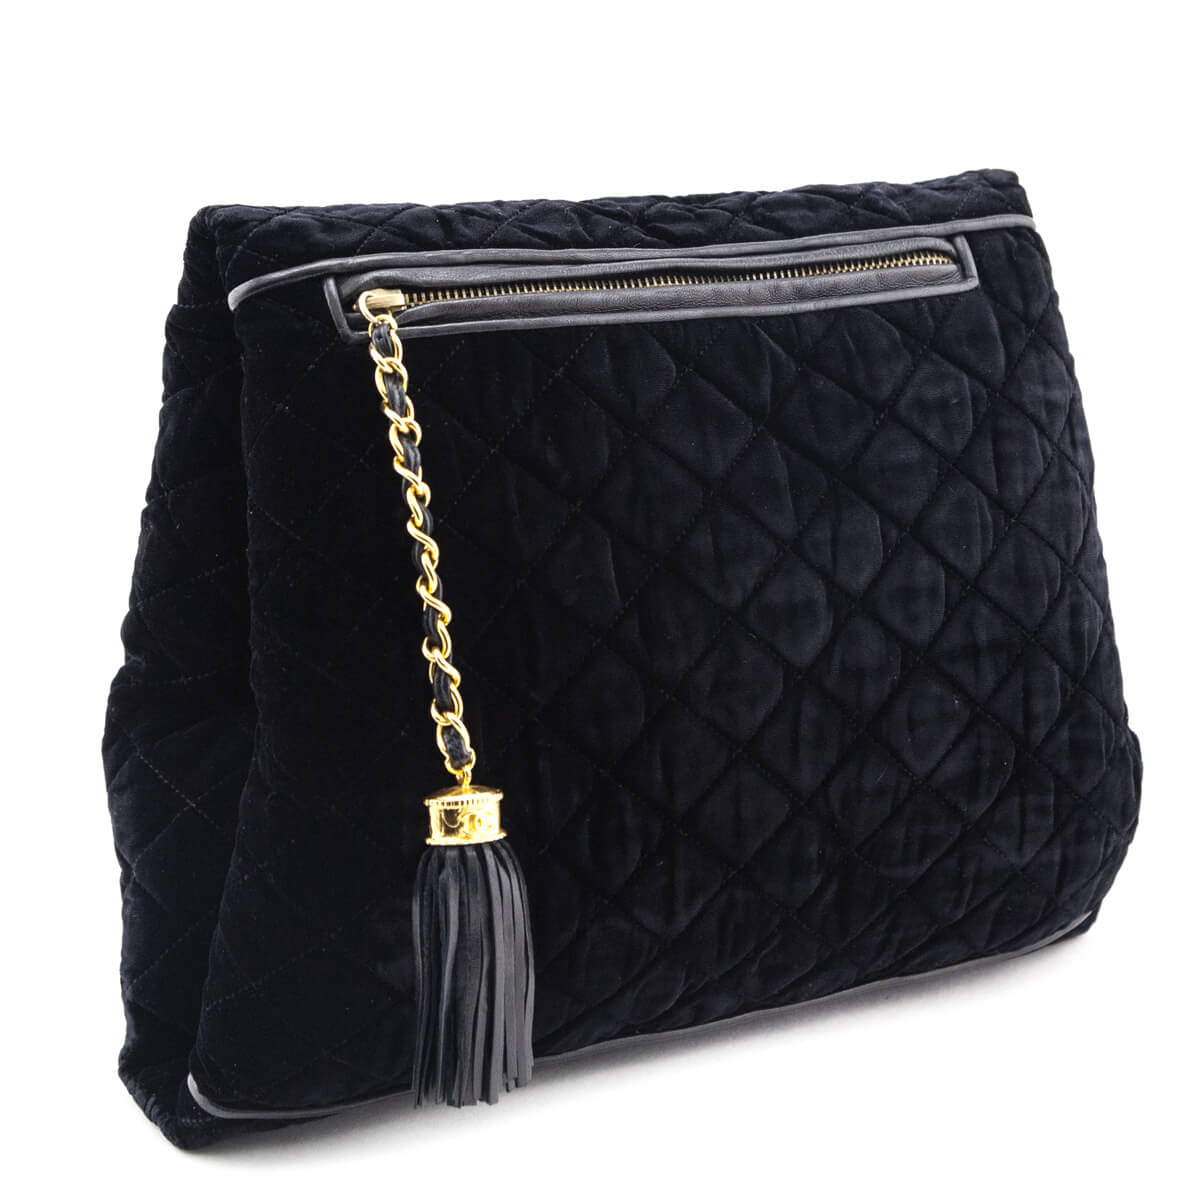 Handbags - Authentic Designer Handbags - Love that Bag etc – Love